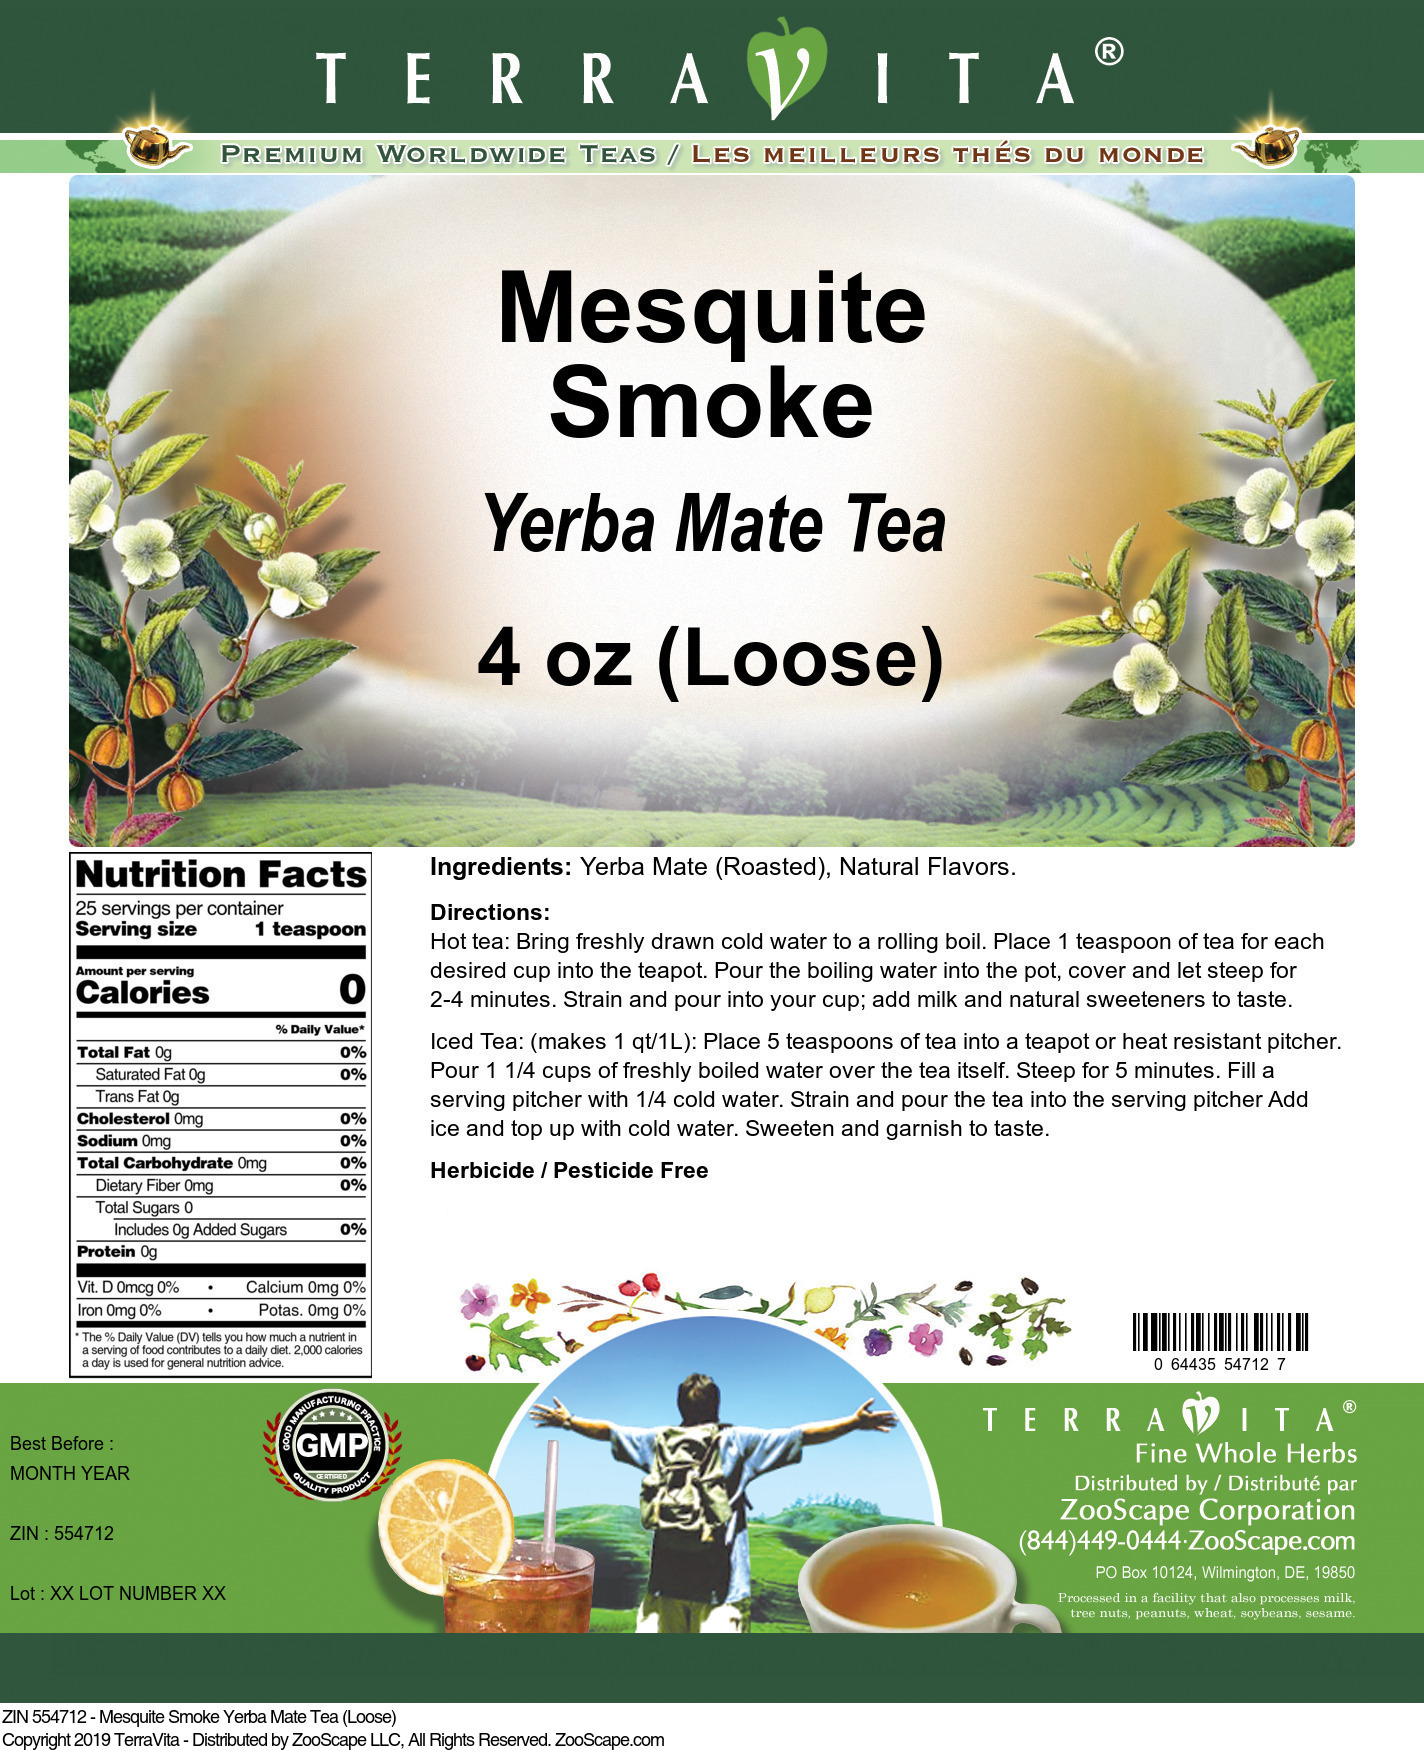 Mesquite Smoke Yerba Mate Tea (Loose) - Label